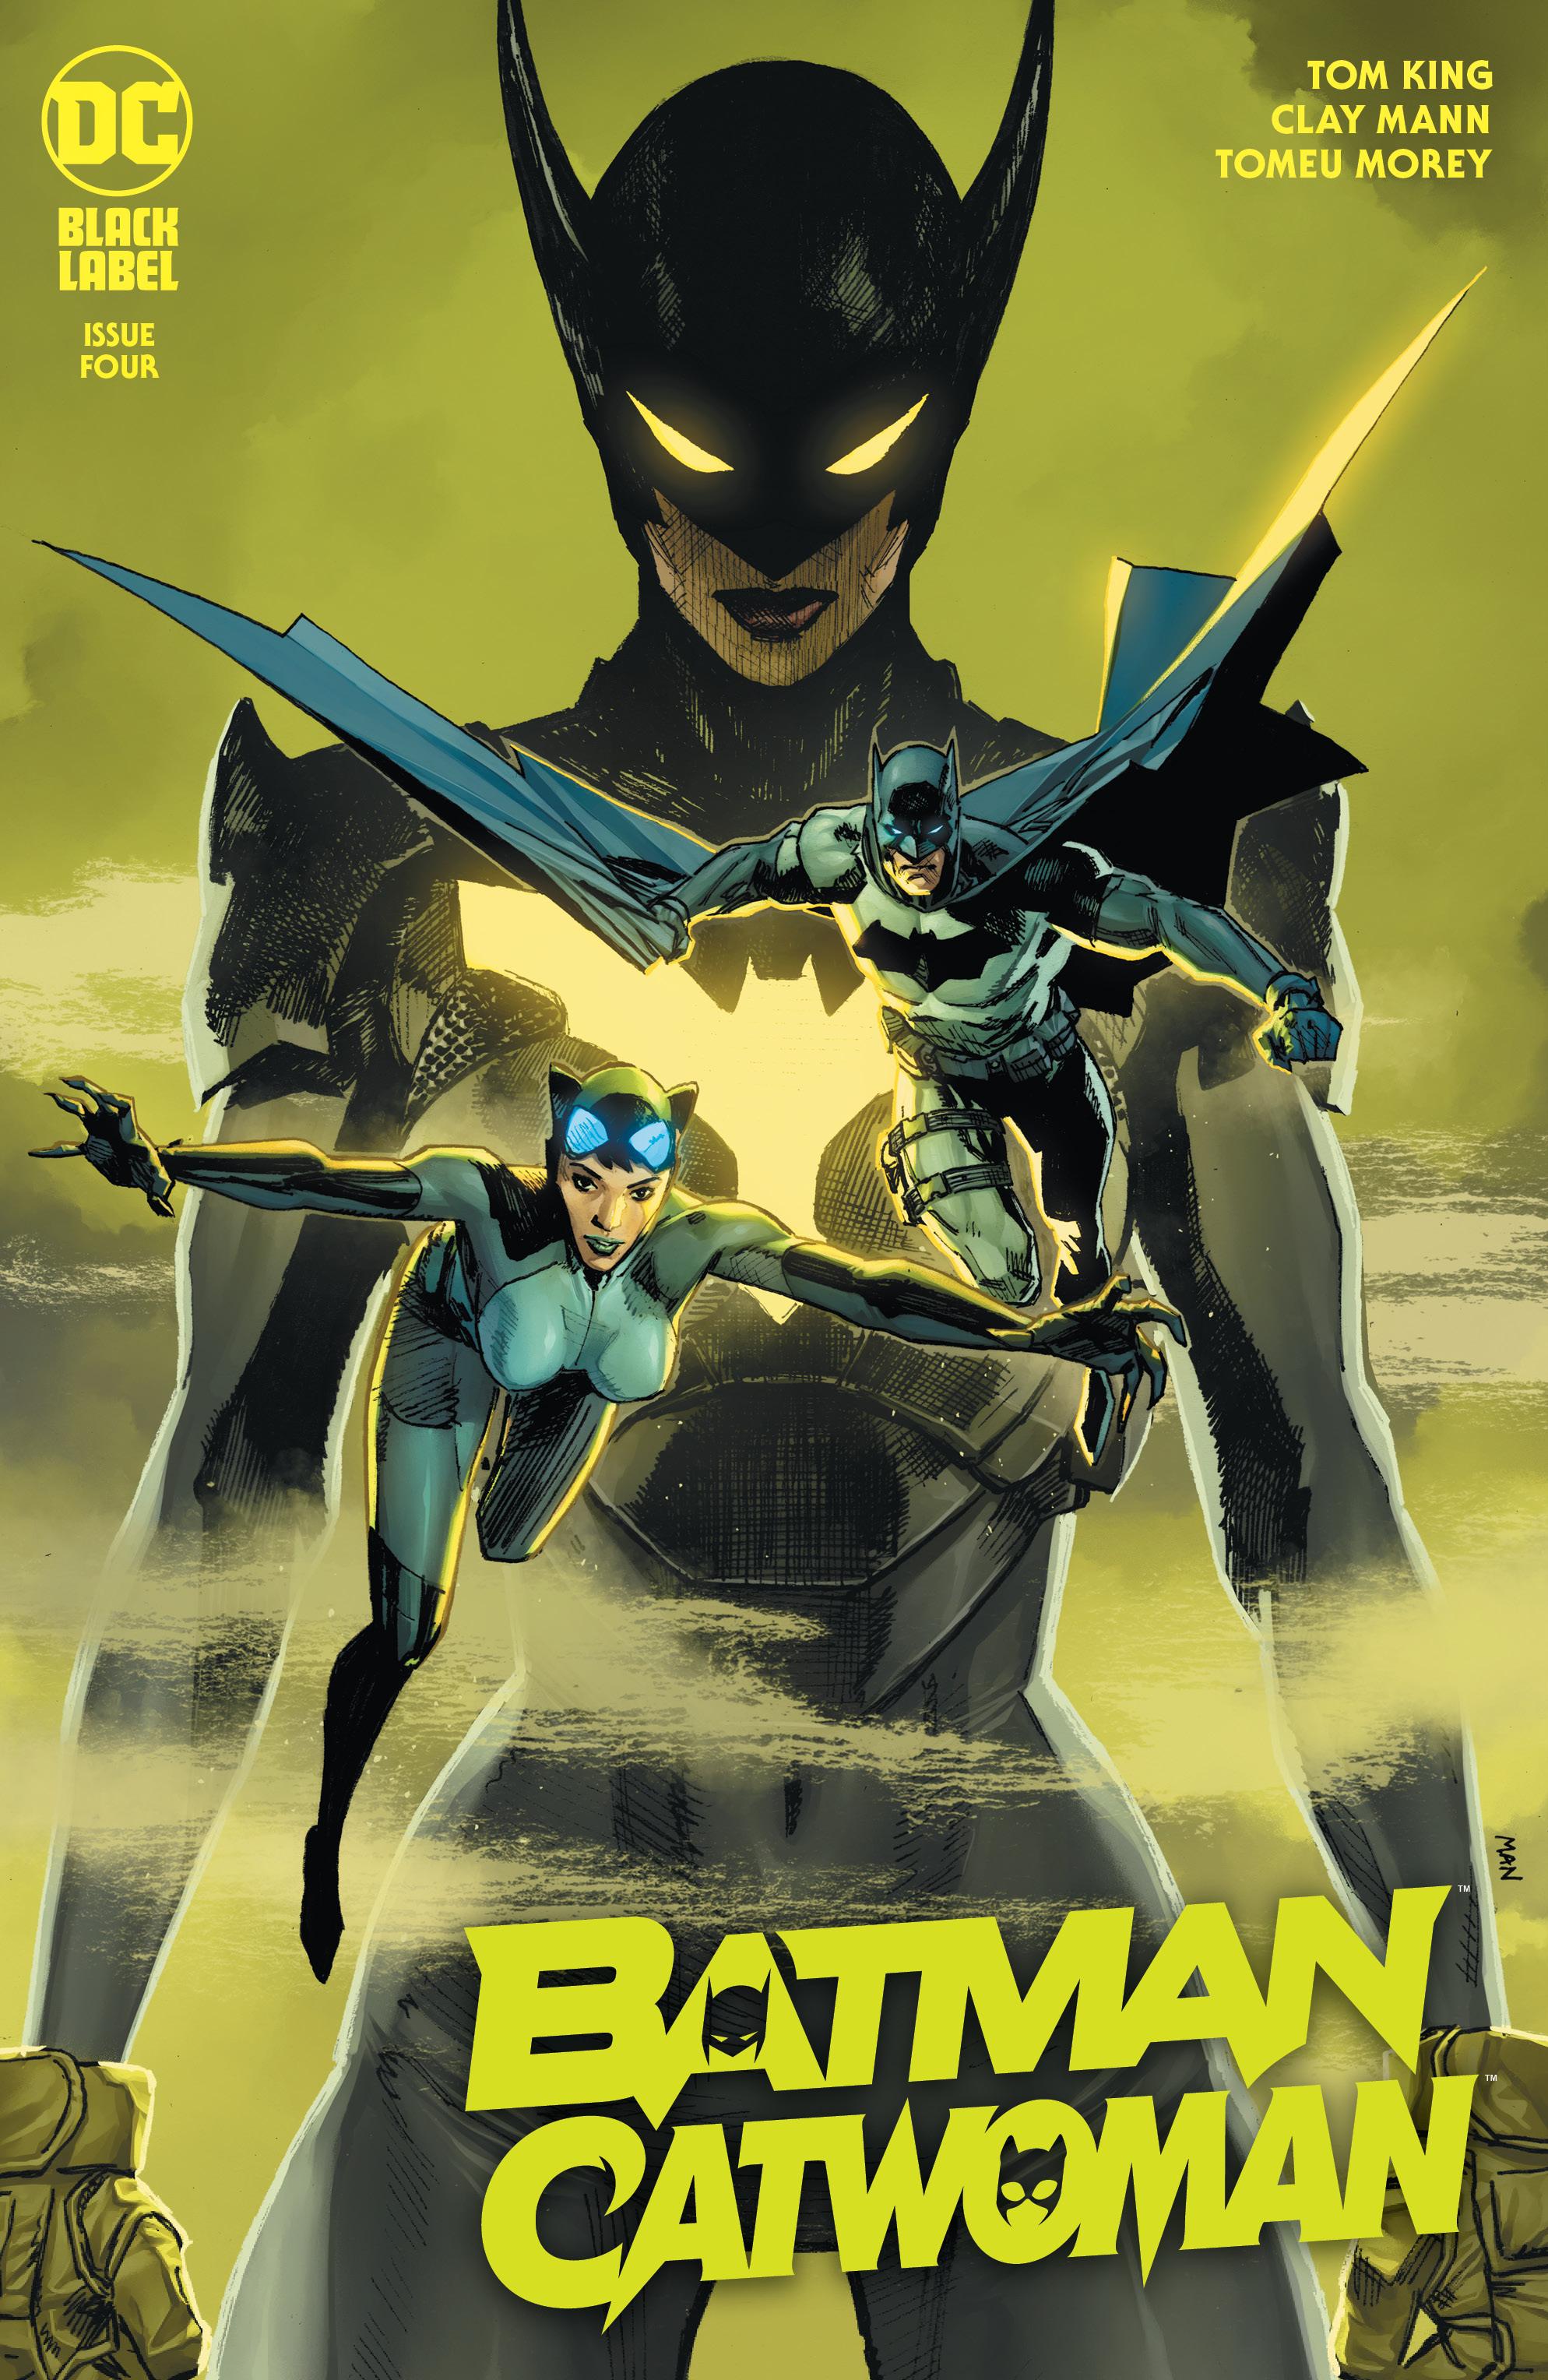 Batman Catwoman #4 (Of 12) Cover A Clay Mann (Mature)